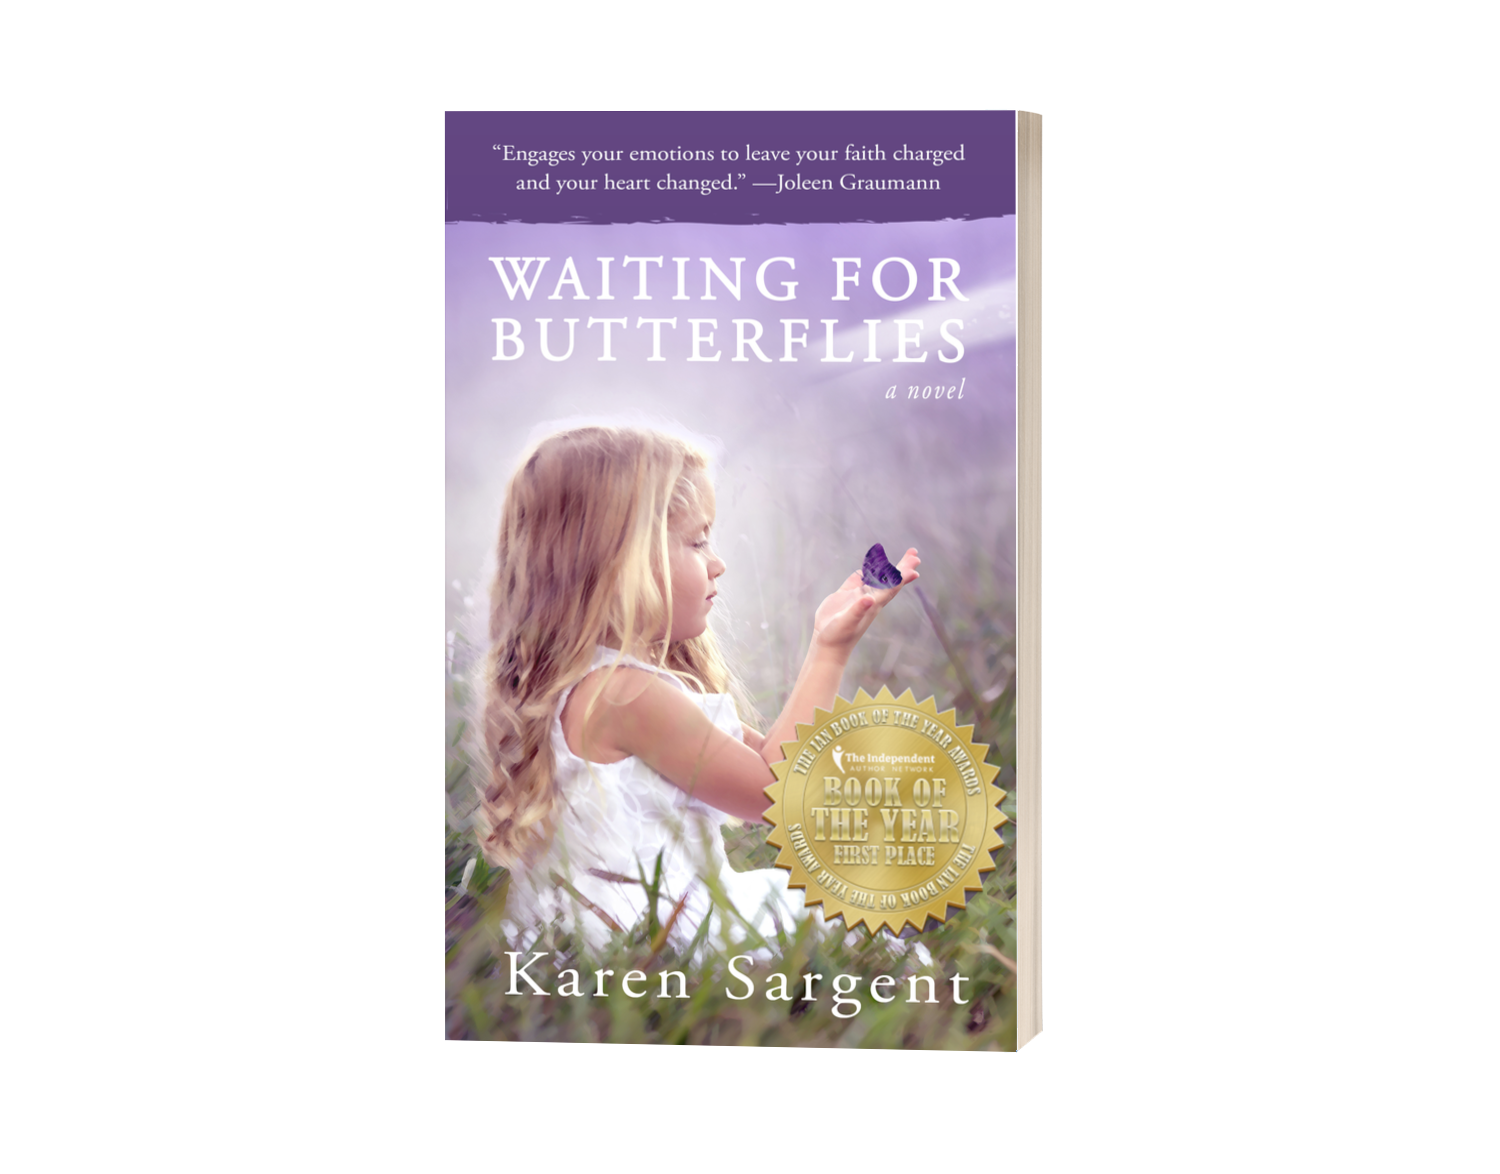 3D Book cover image for Karen Sargent's Waiting for Butterflies novel